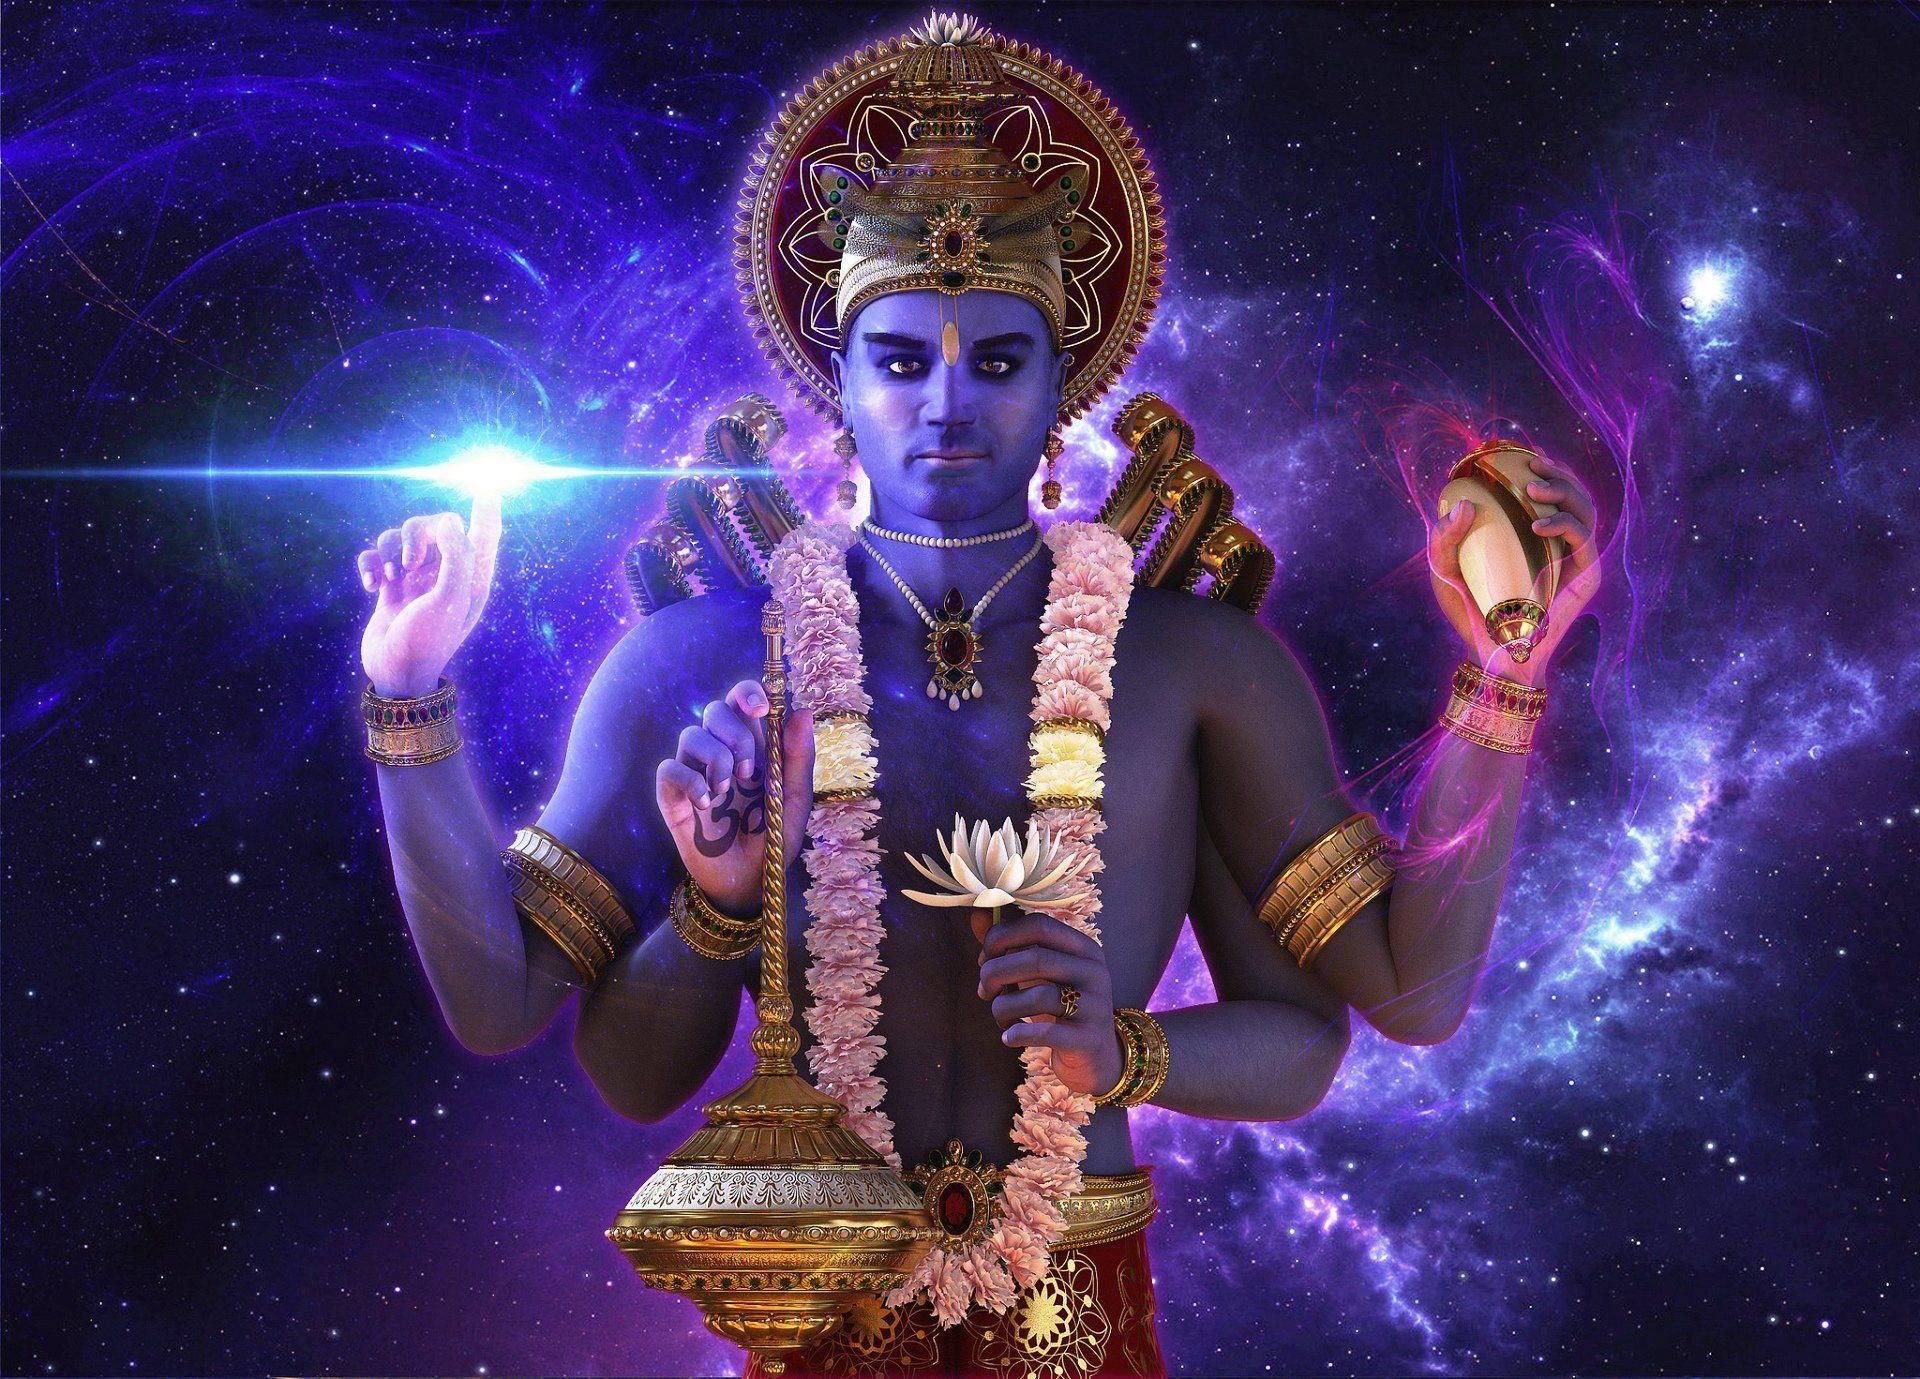 Vishnu and Lakshmi Images – A MYTHOLOGY BLOG